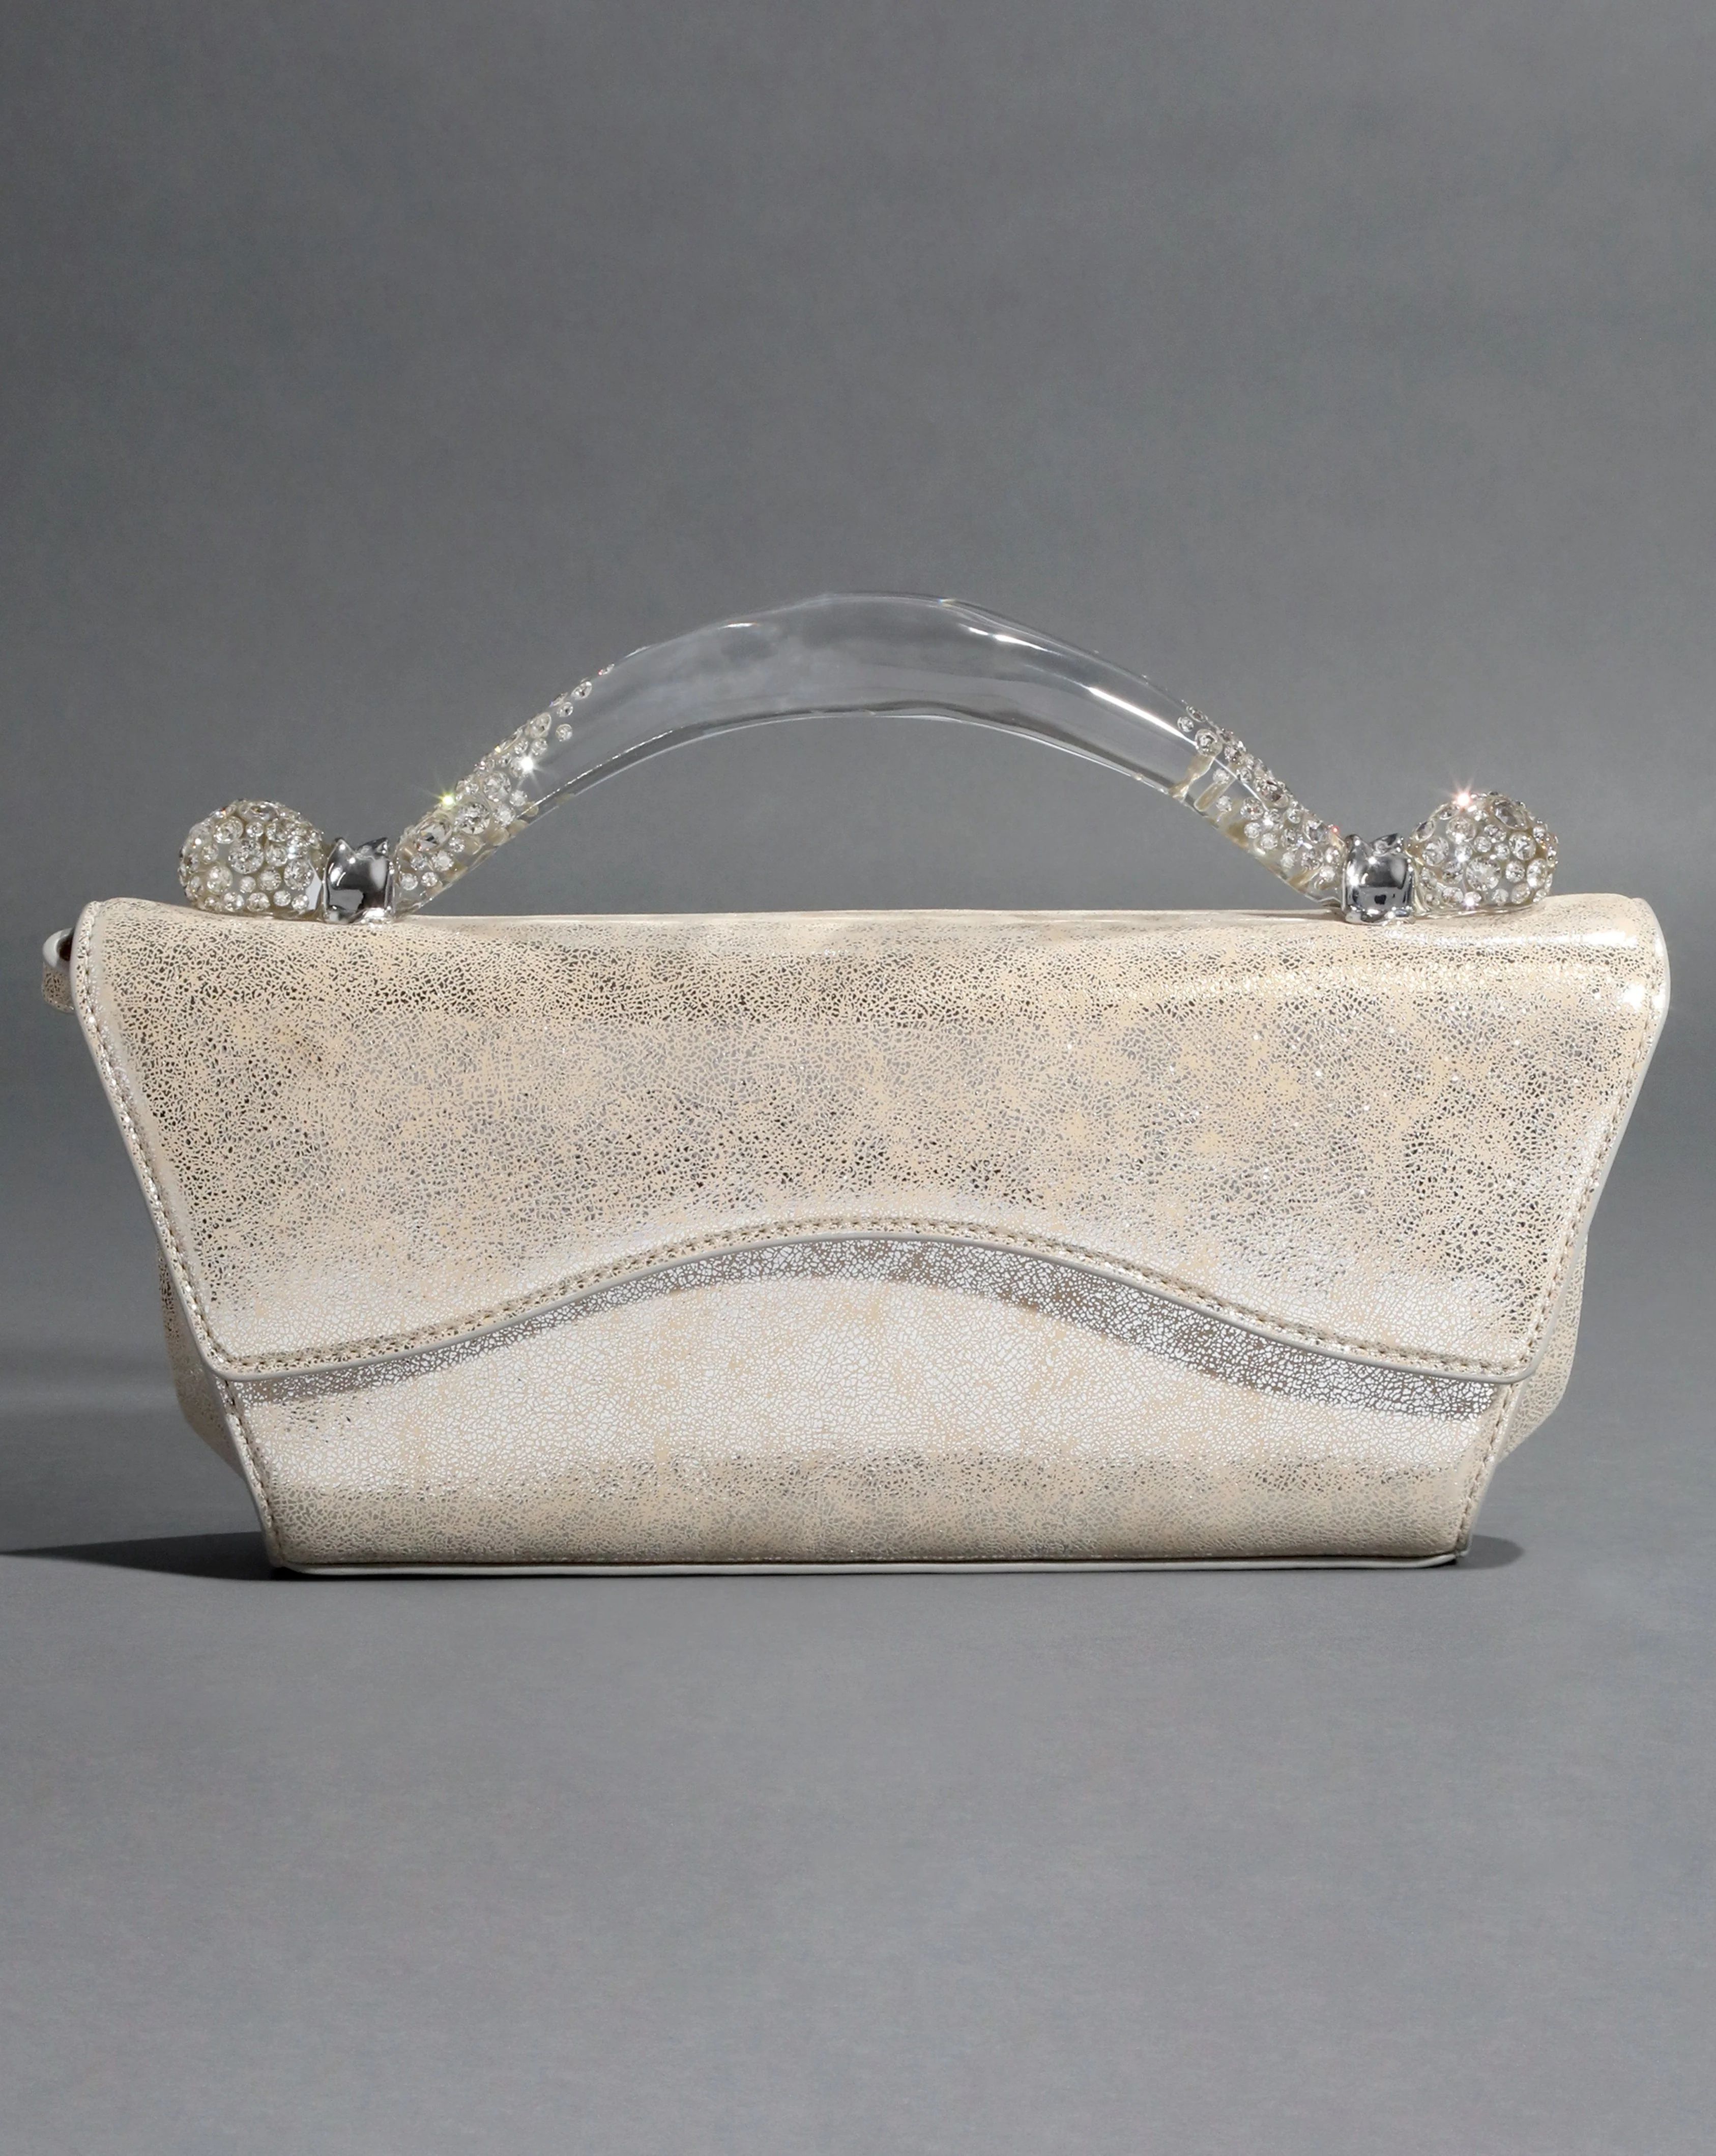 Opalescent Pearl Candy Box Lucite Handle Handbag | Alexis Bittar | Alexis Bittar